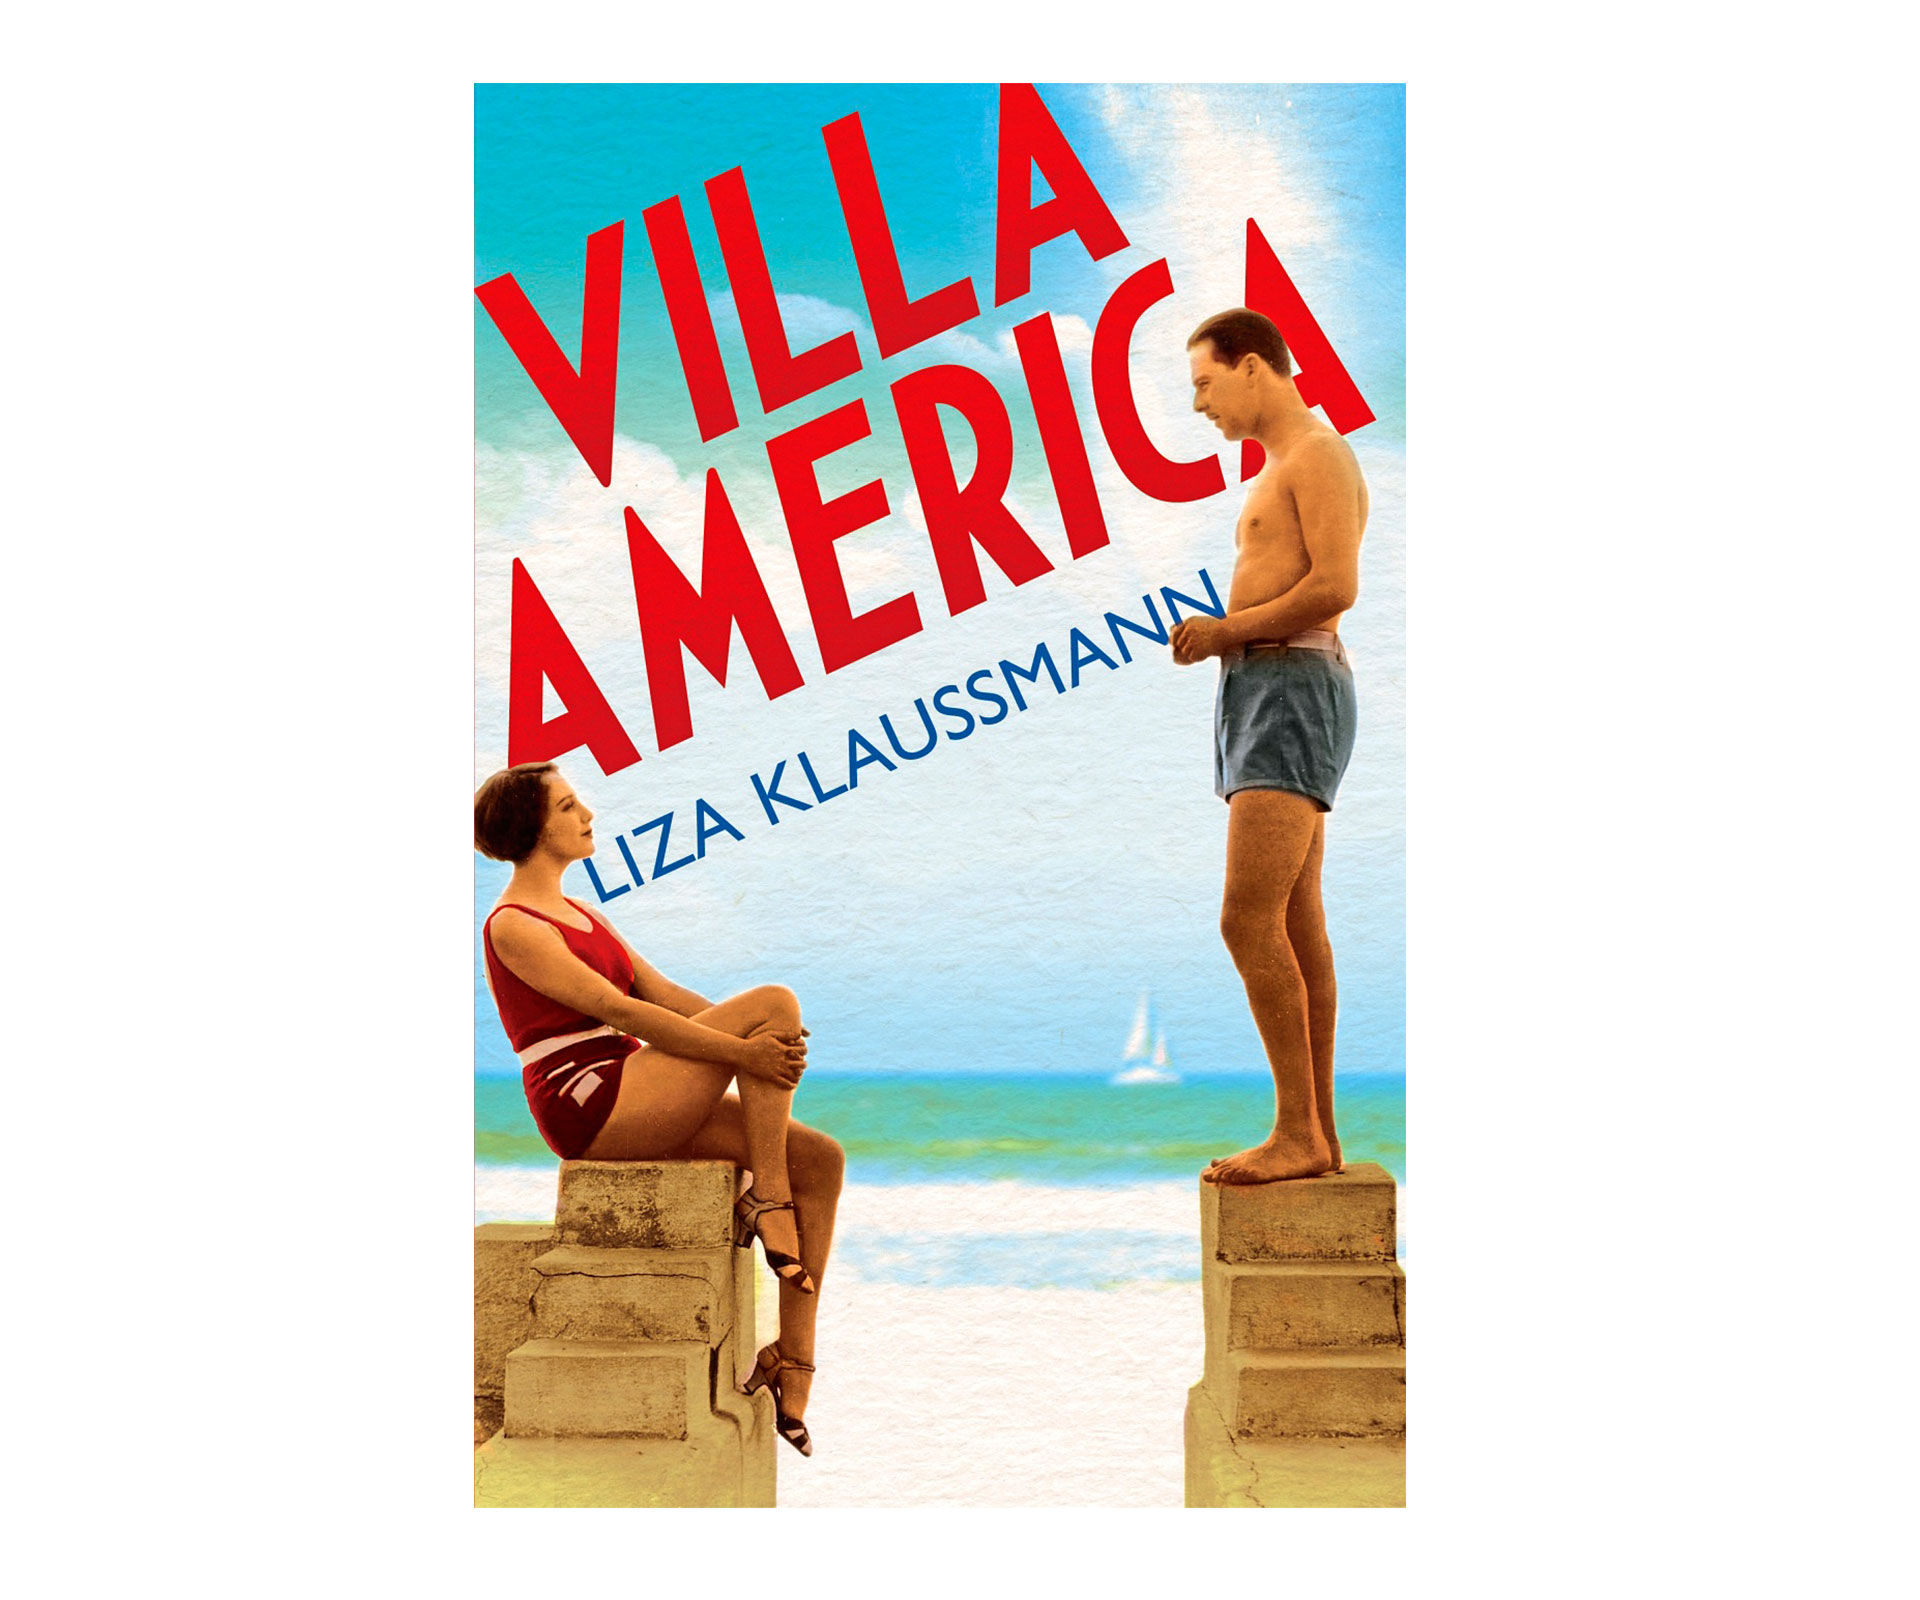 Villa America by Liza Klaussmann